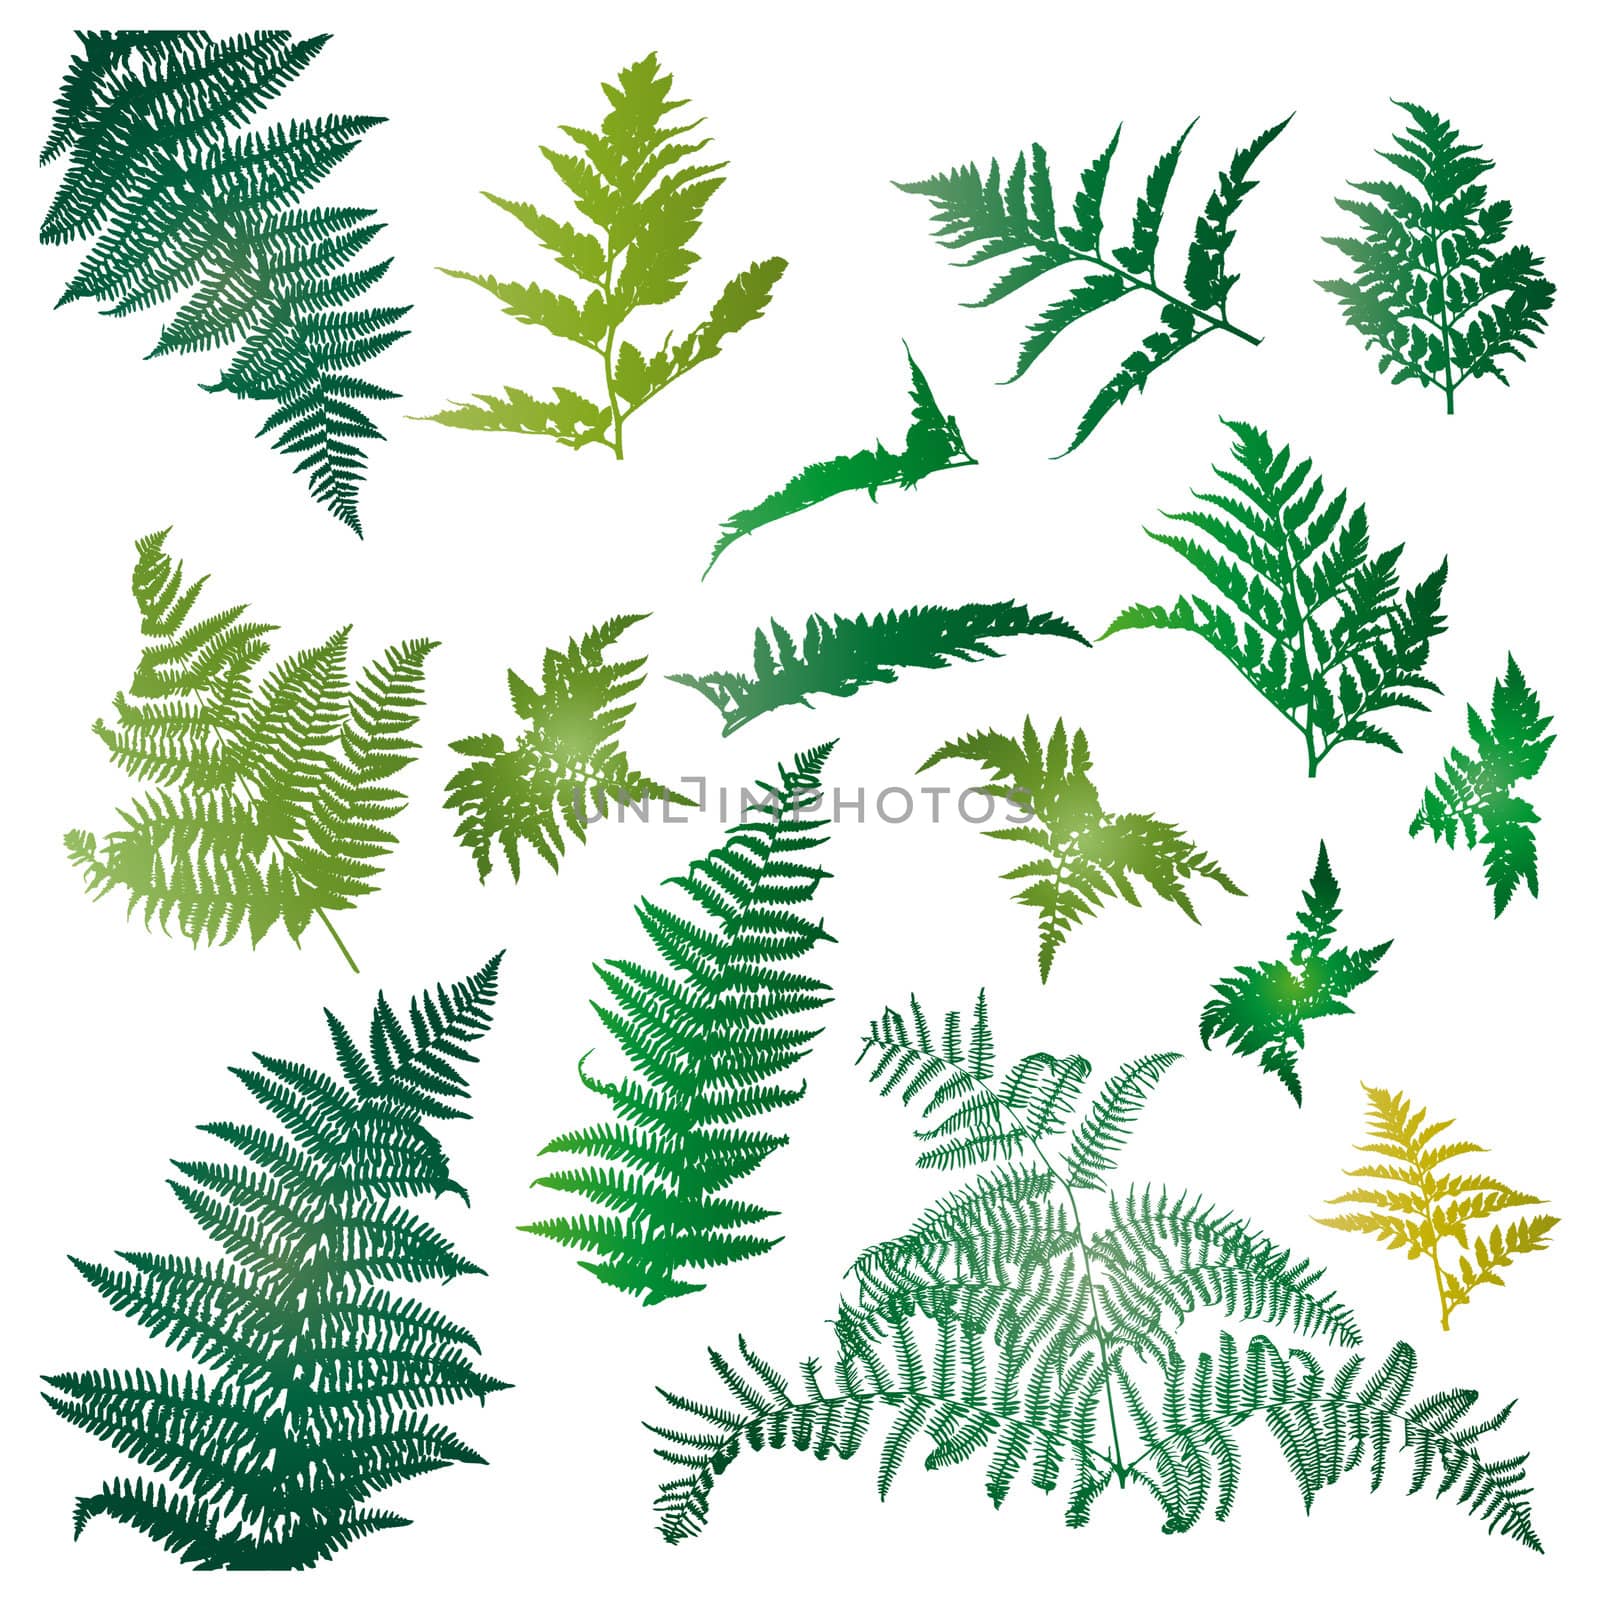 Fern leaves illustrated in a set of design elements.